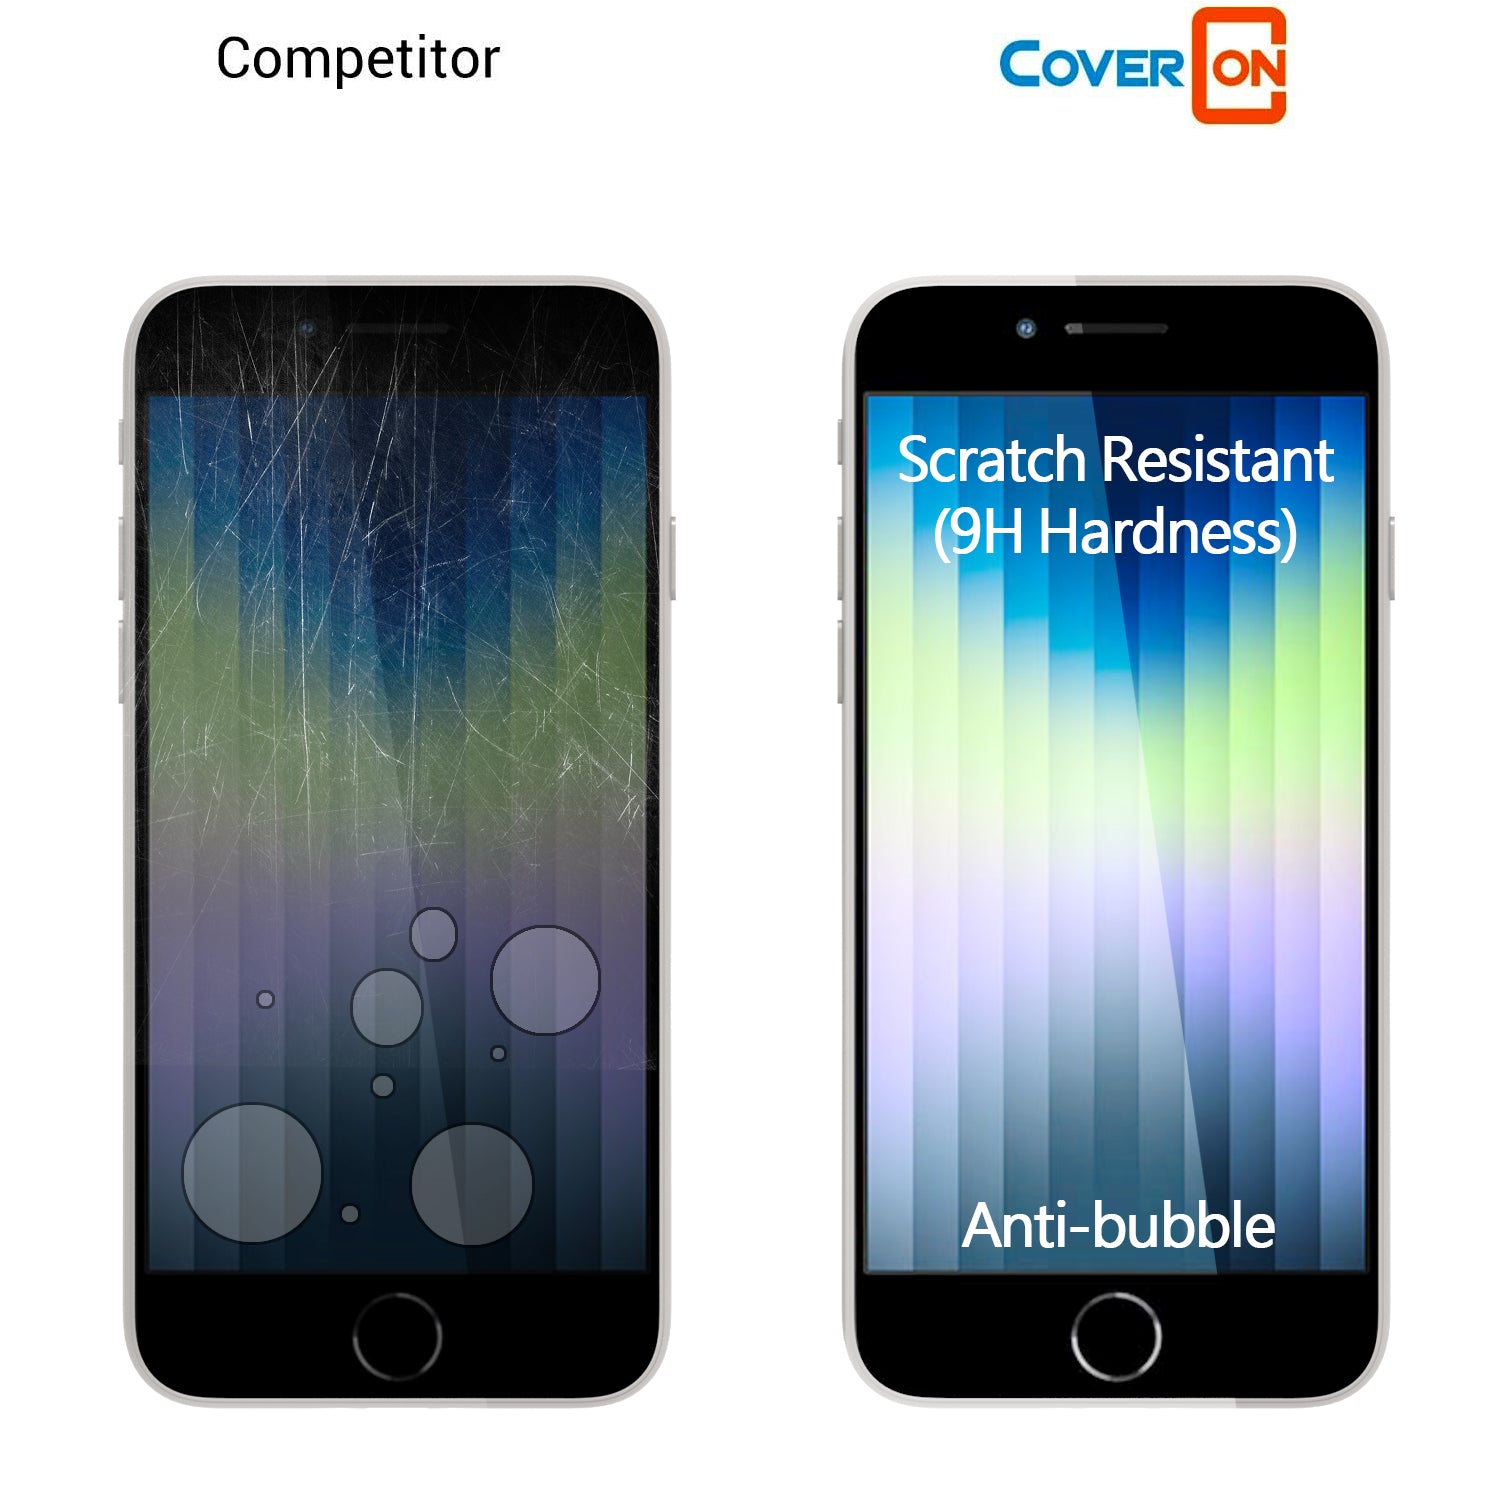 Apple iPhone SE 2022 / SE 2020 / 8 Case Slim TPU Phone Cover w/ Carbon Fiber